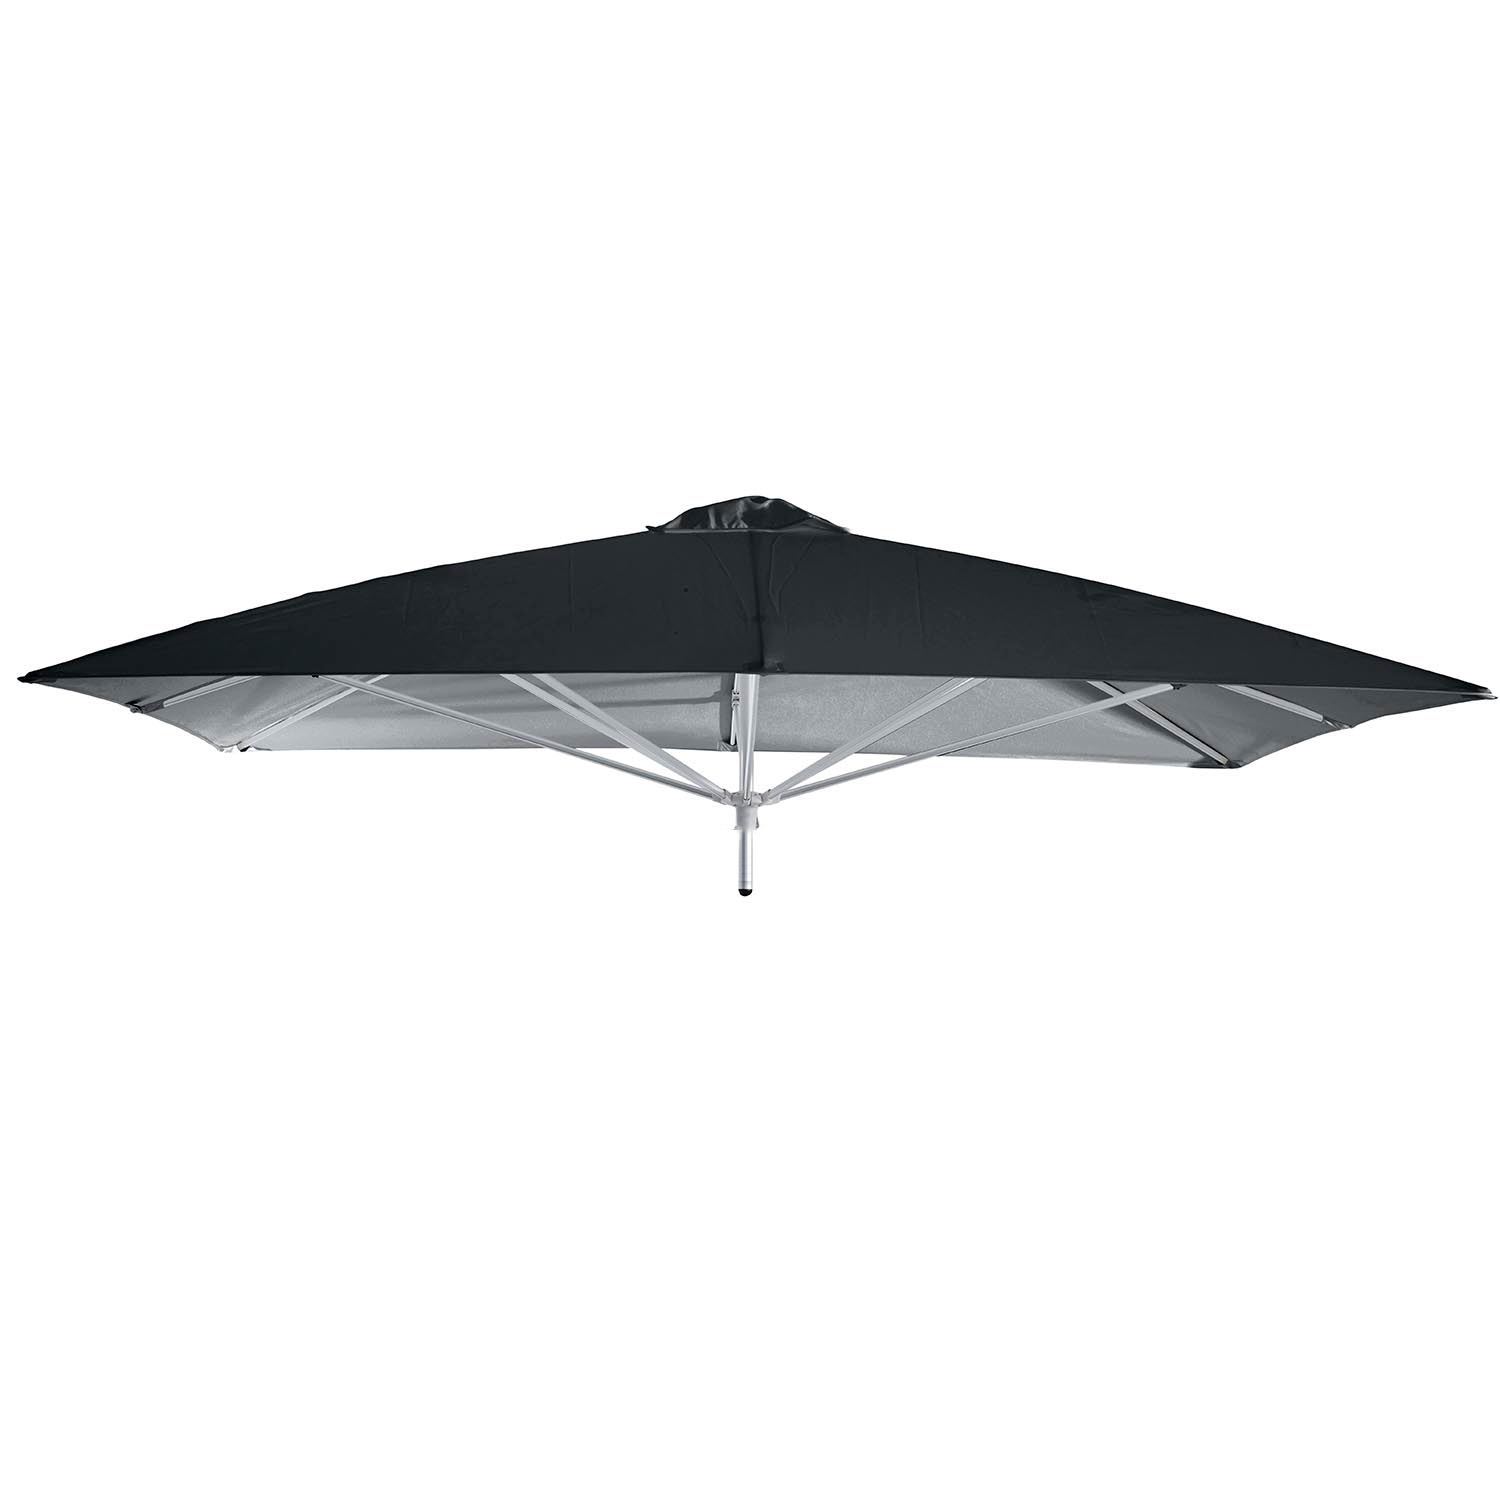 Paraflex Neo parasolkap 230x230cm - Sunbrella (Black)